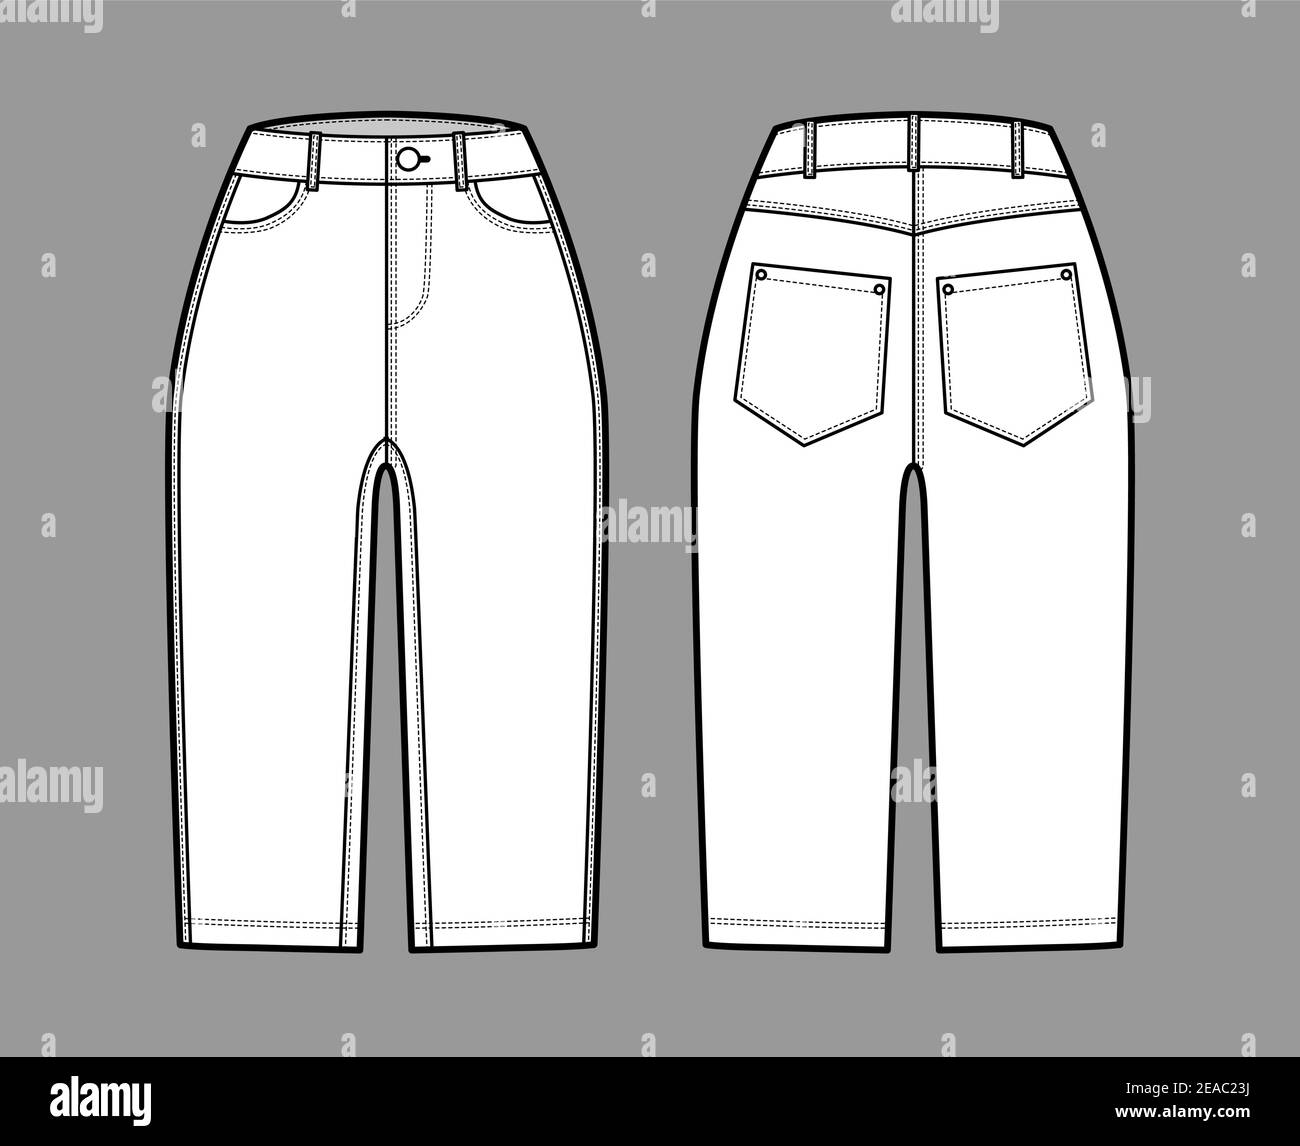 Denim short pants technical fashion illustration with knee length ...